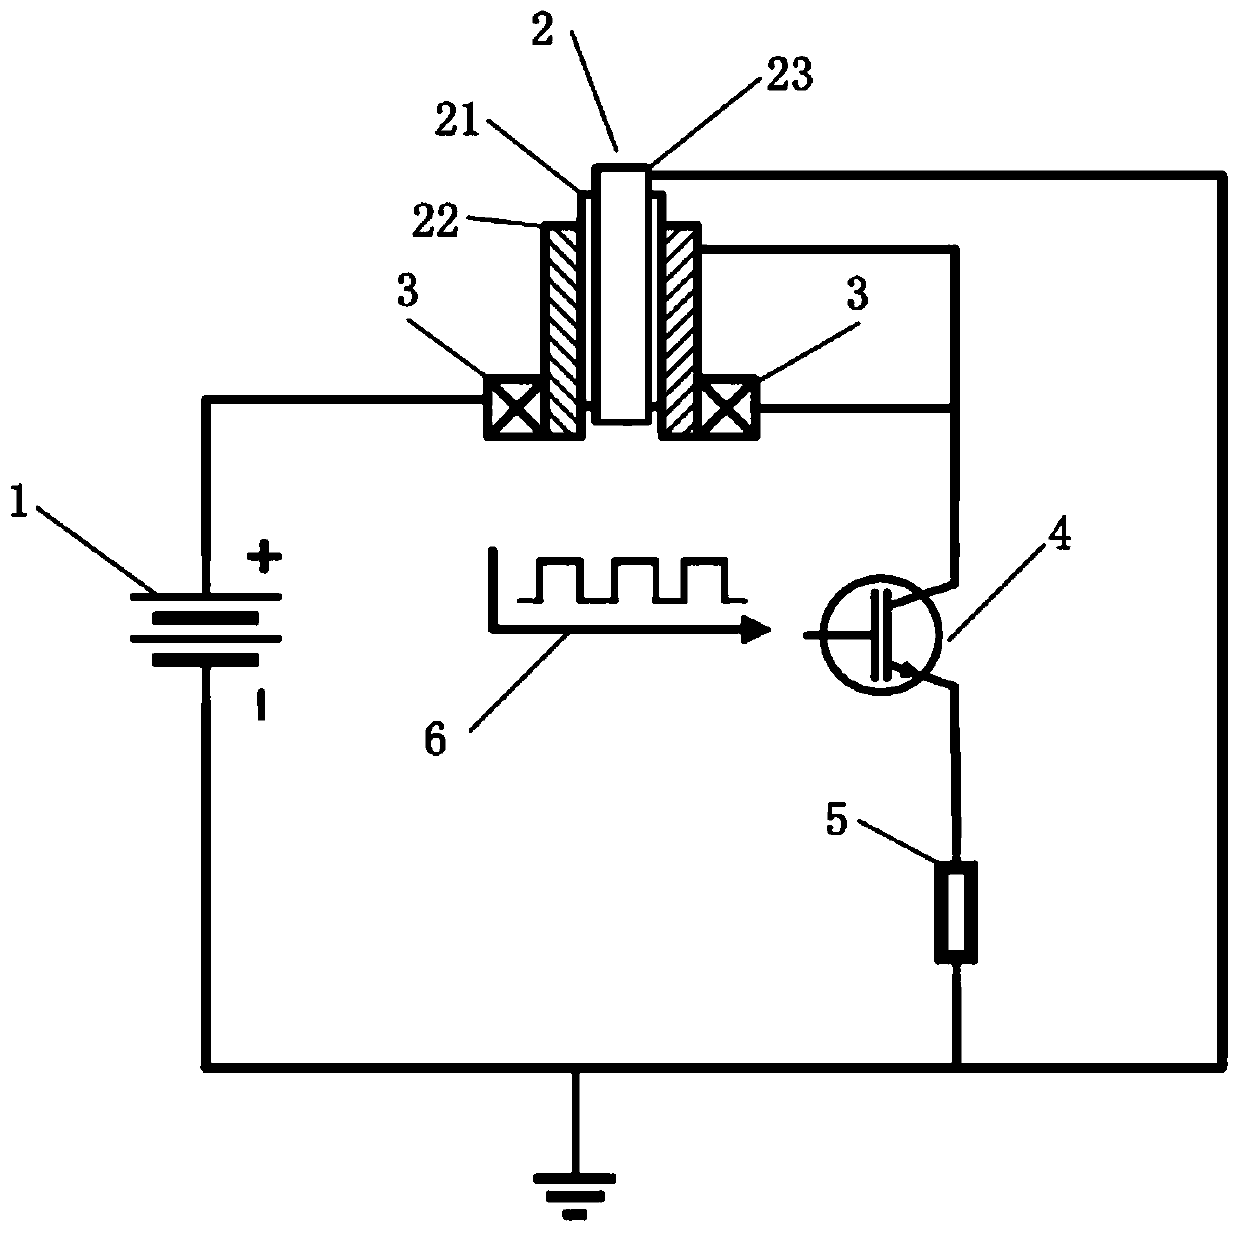 Micro-cathode arc propulsion system